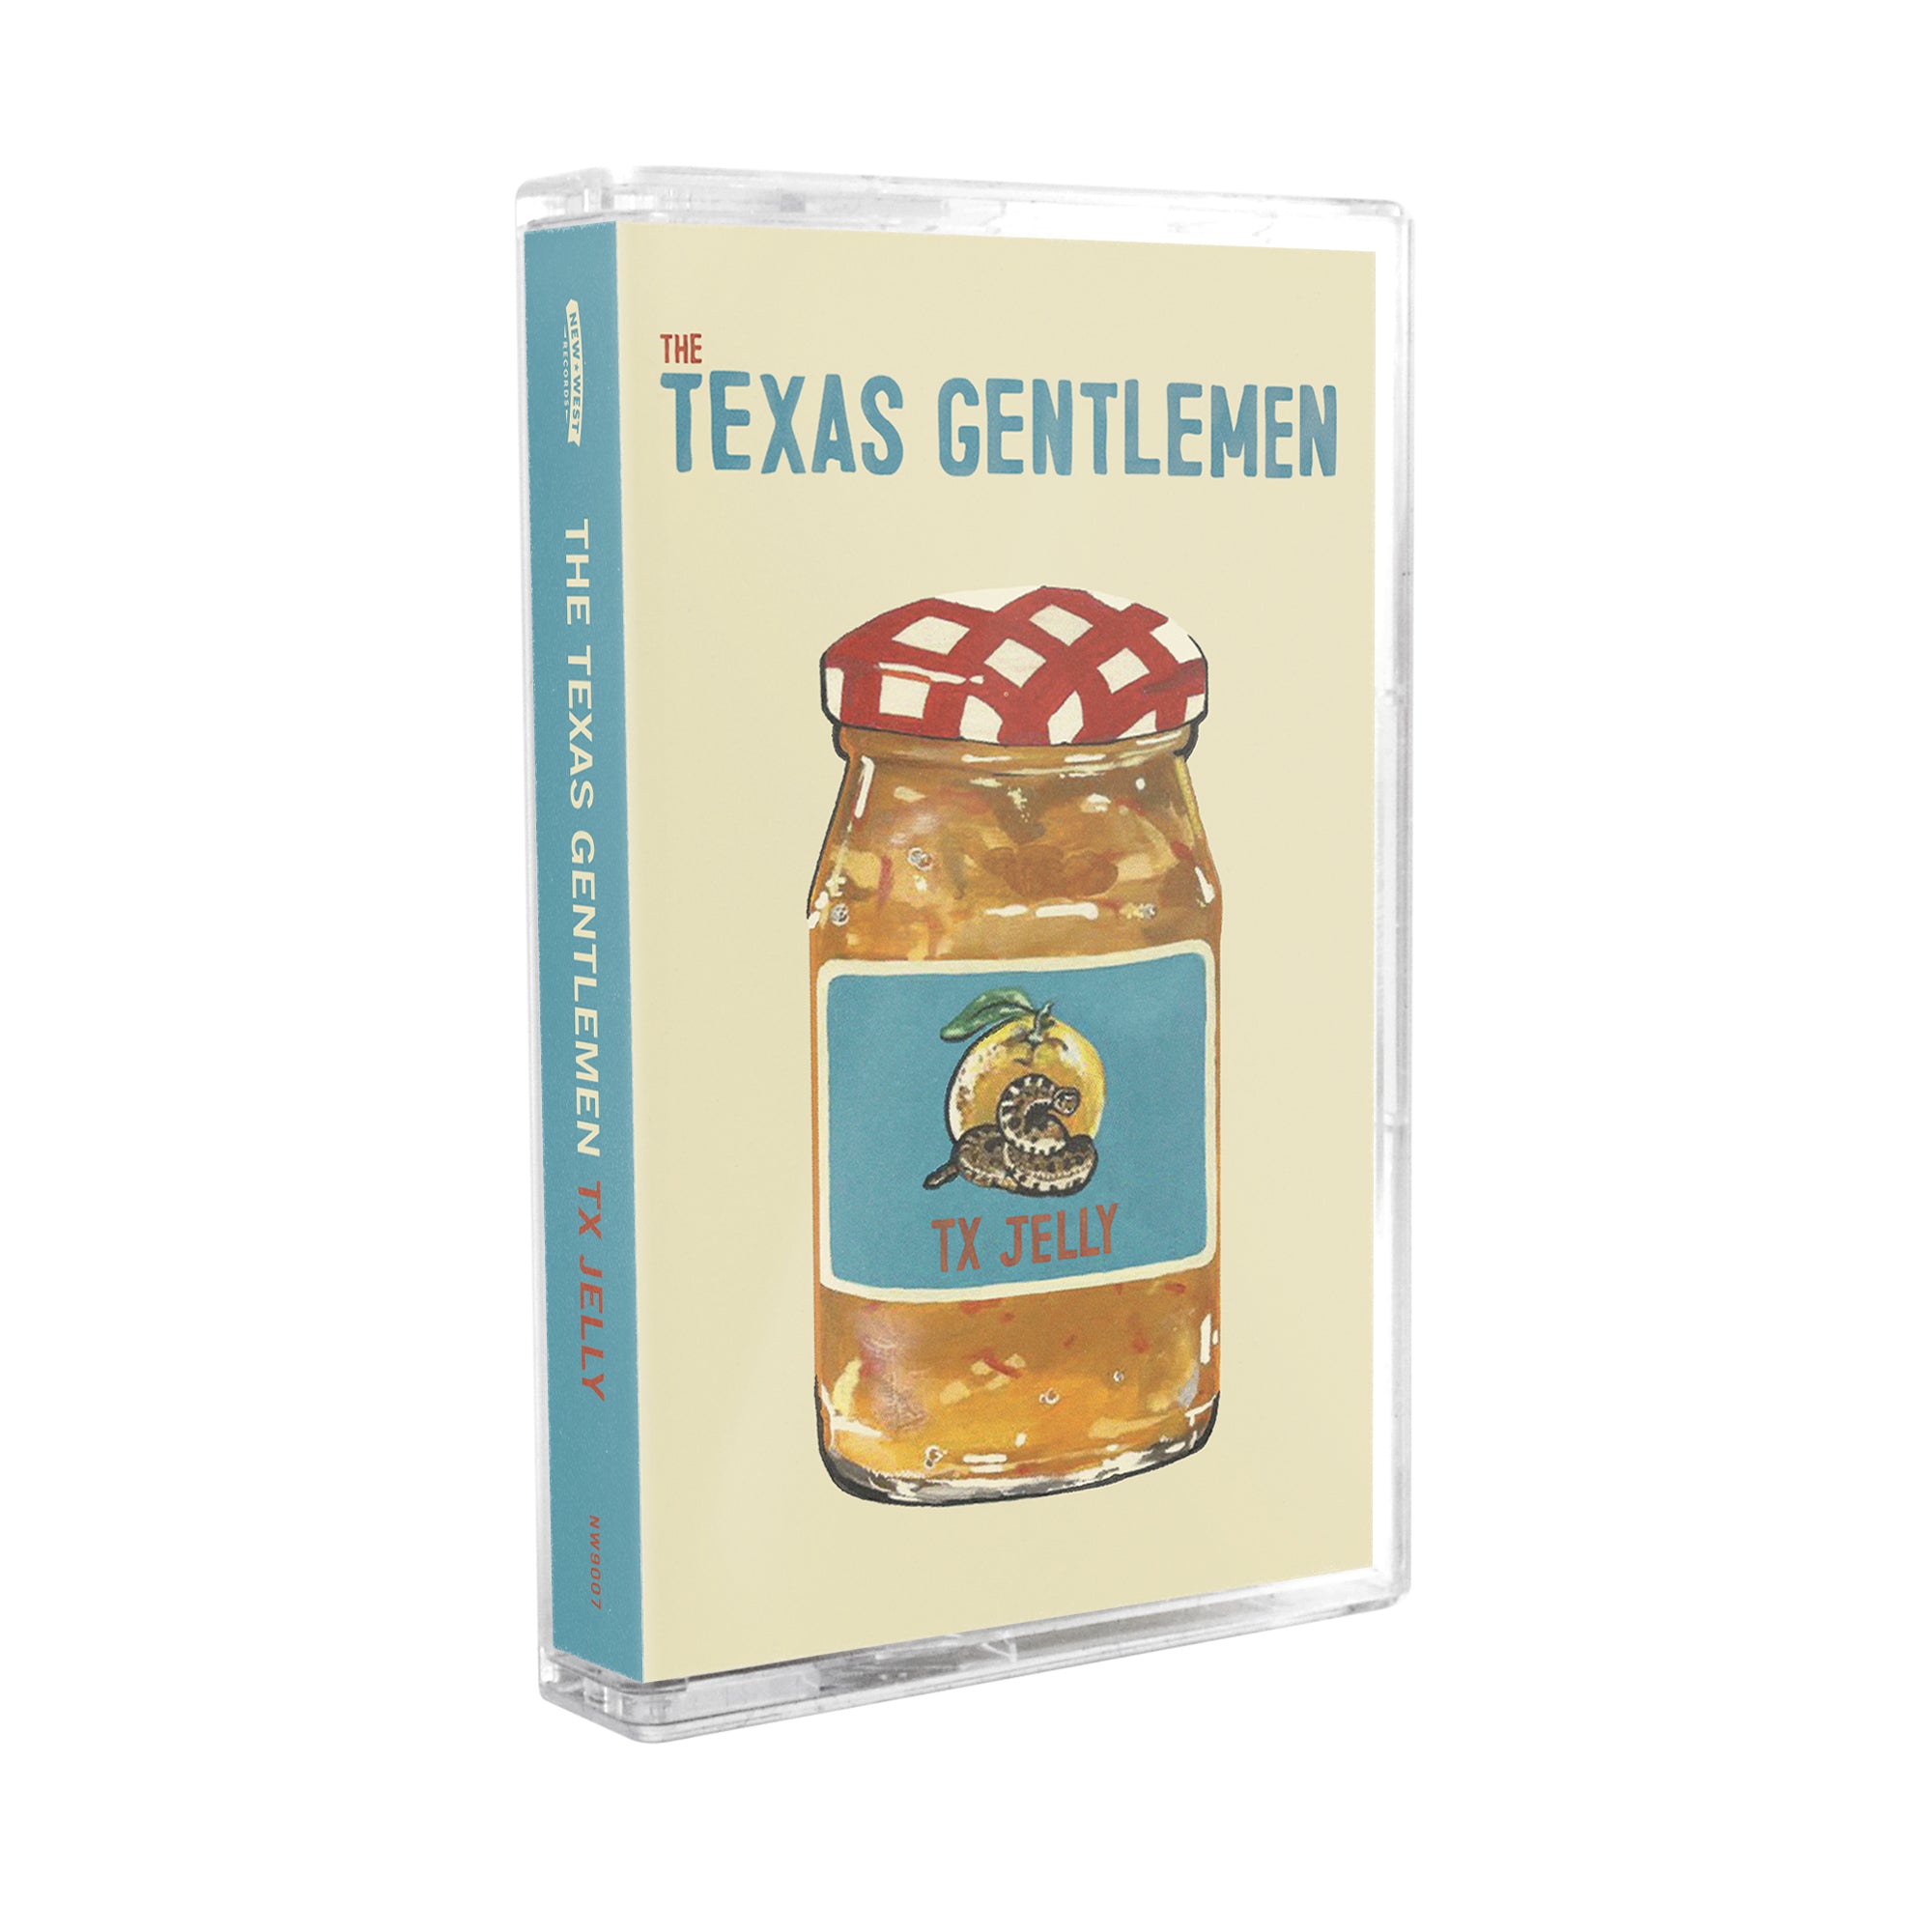 The Texas Gentlemen - TX Jelly [Cassette]